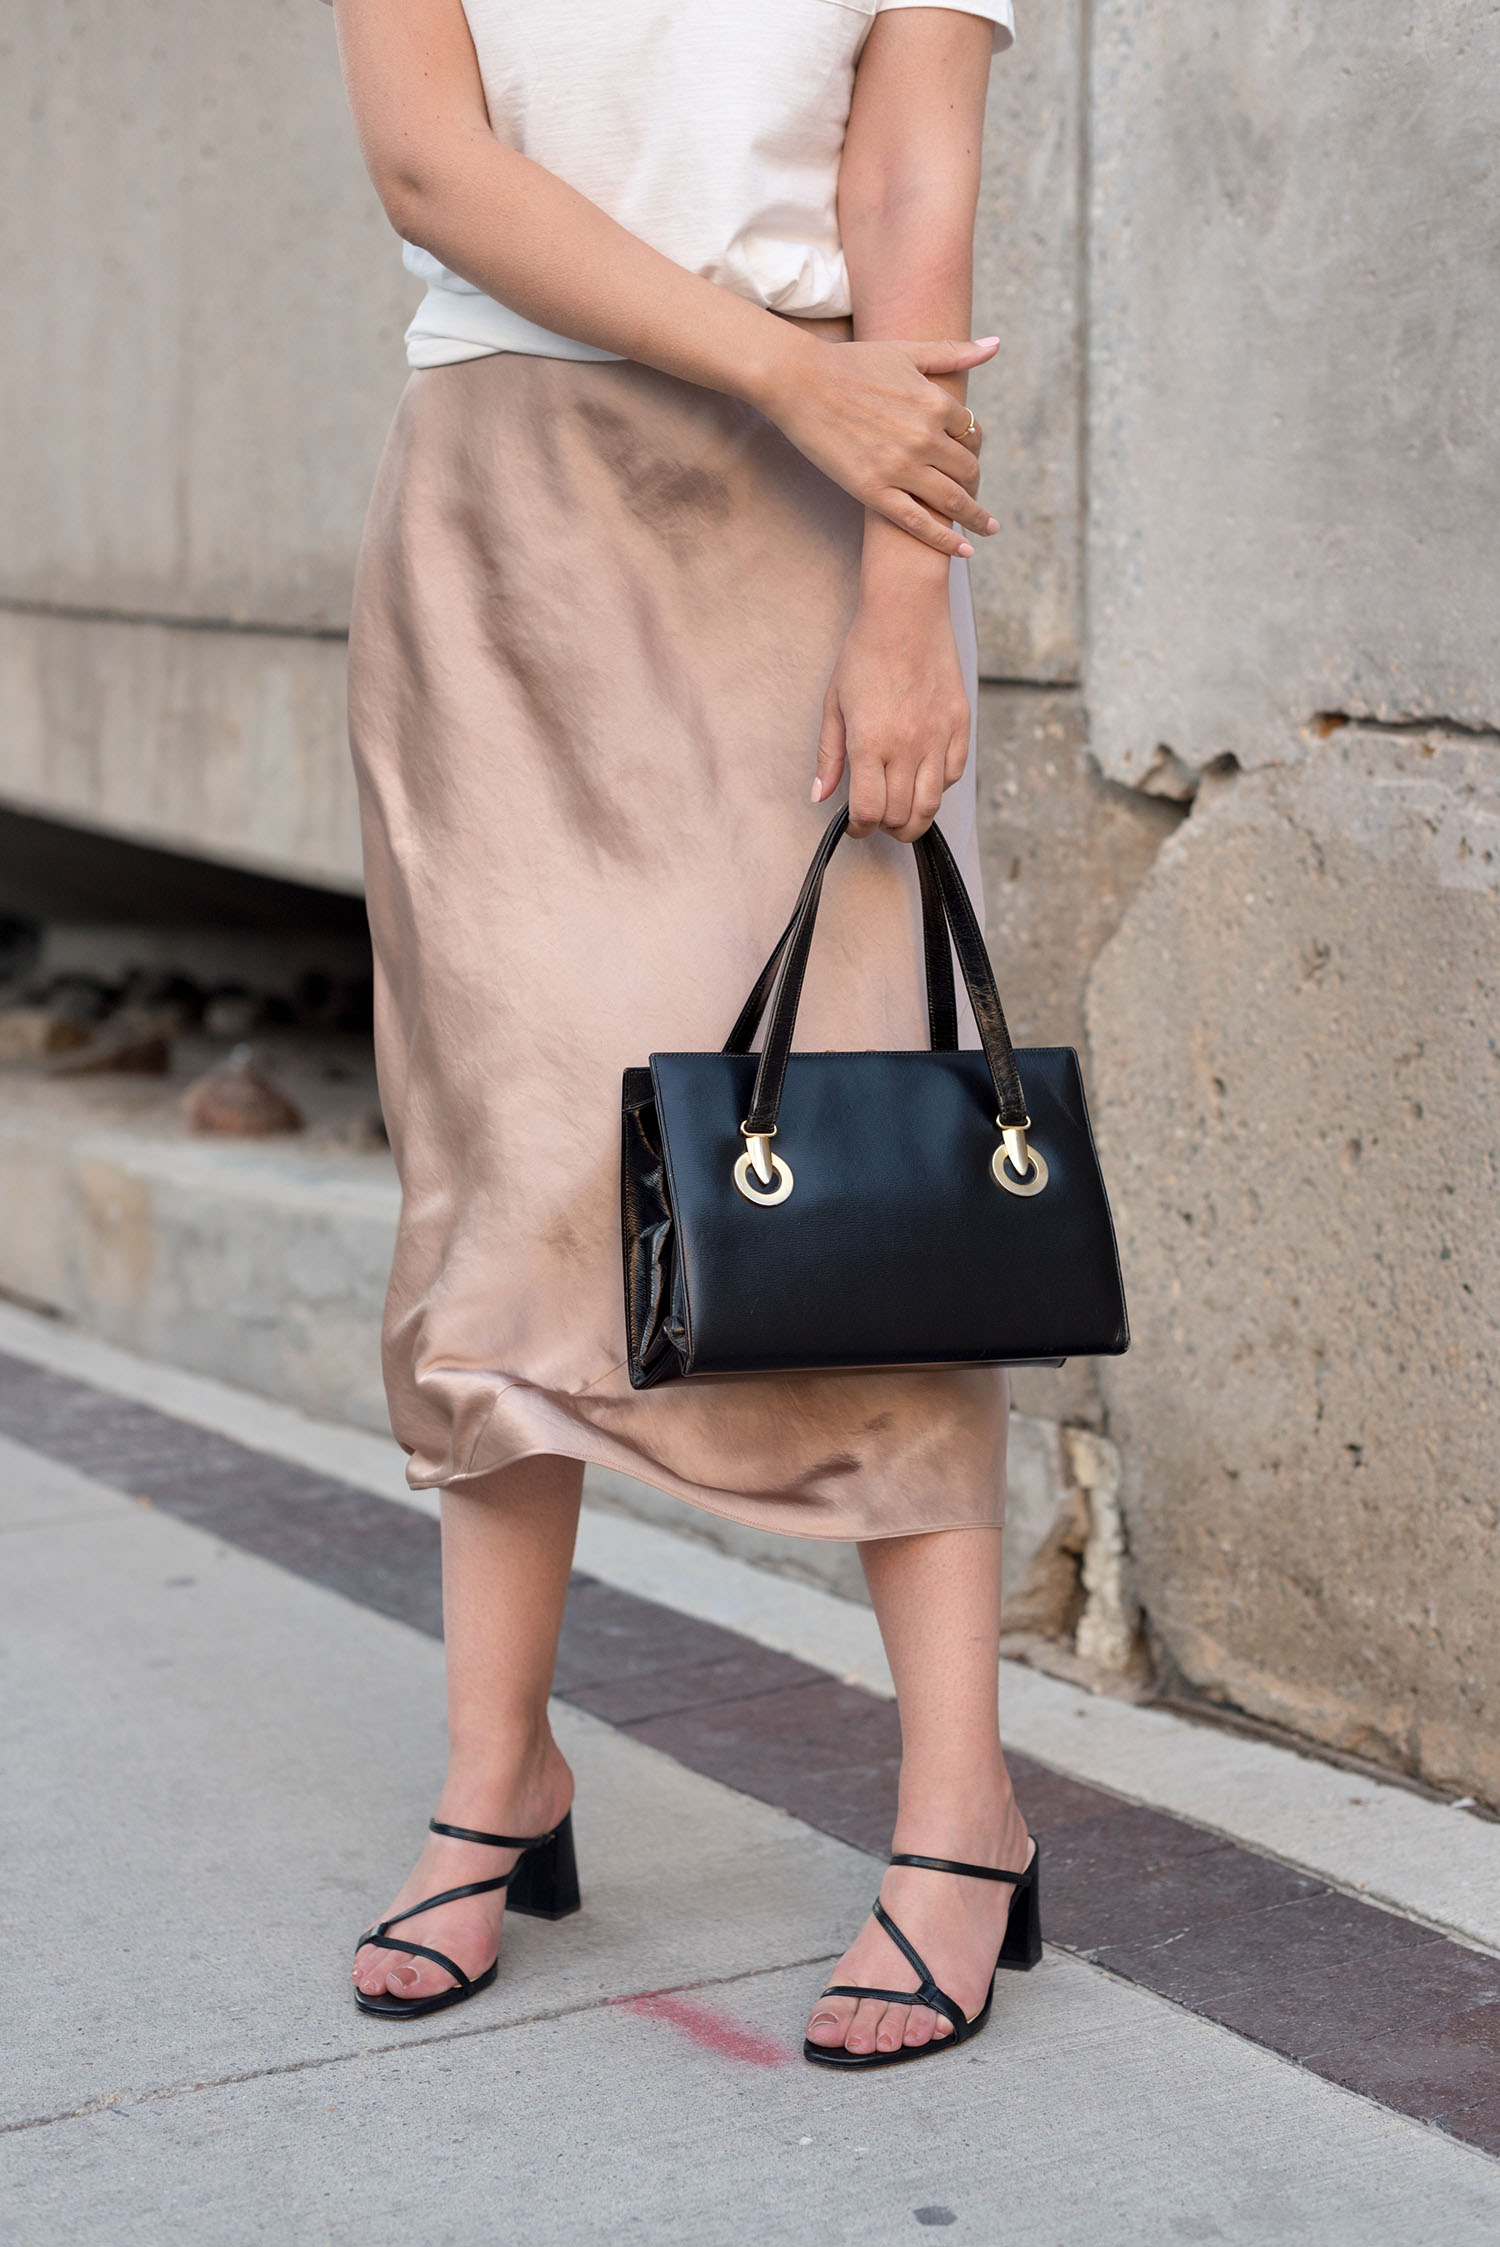 Coco & Vera - Vintage Birks handbag, Zara sandals, Wilfred dress